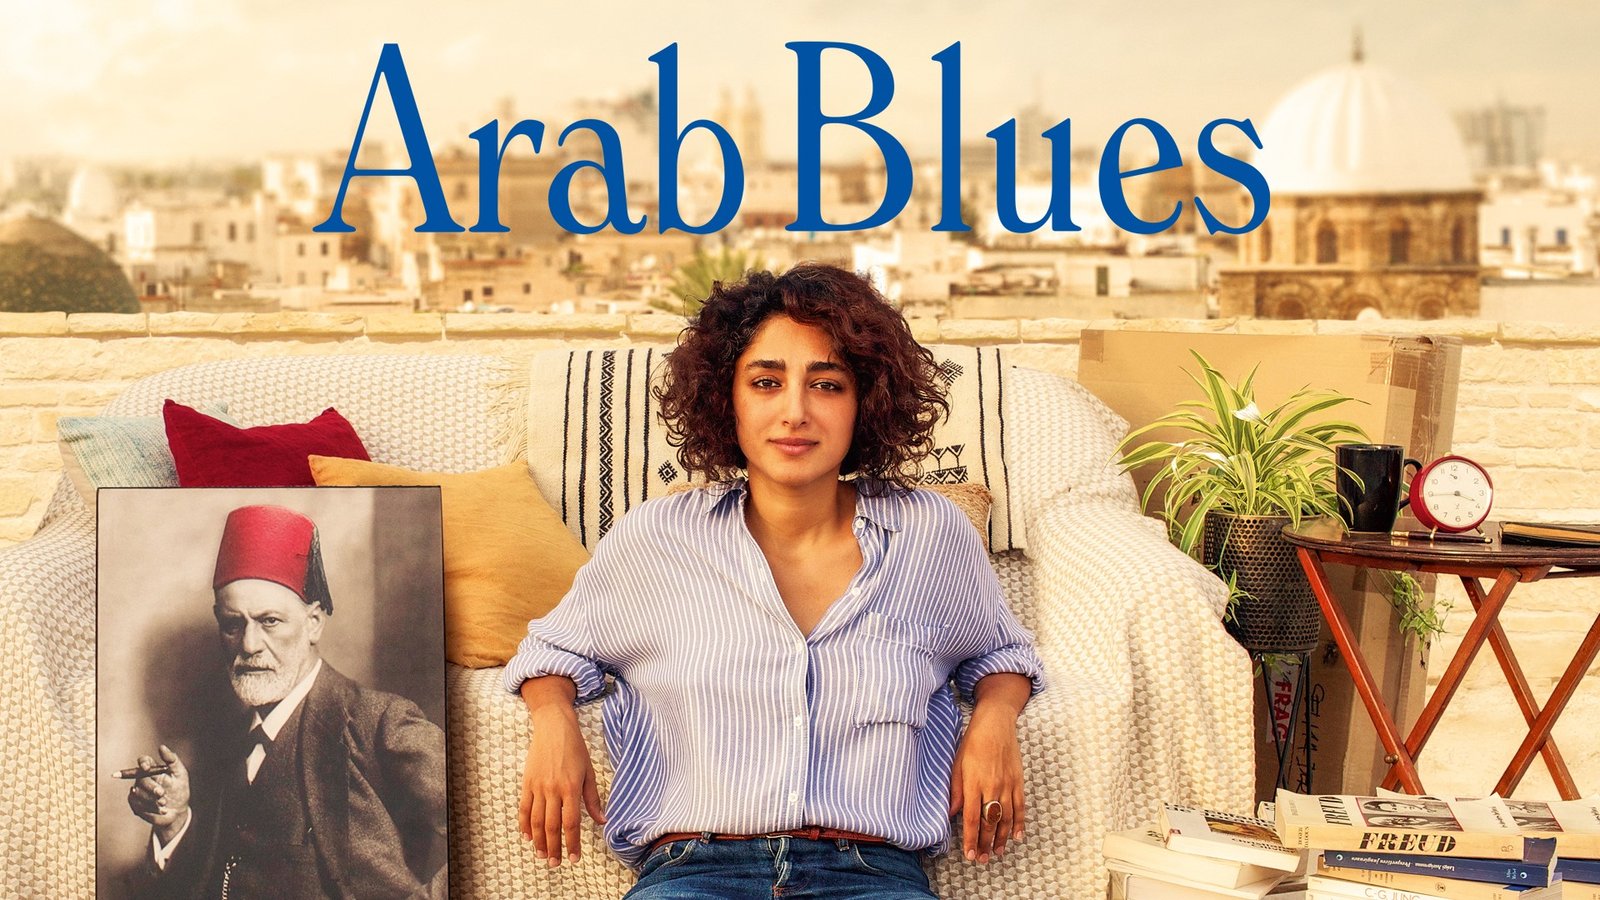 Arab Blues film poster